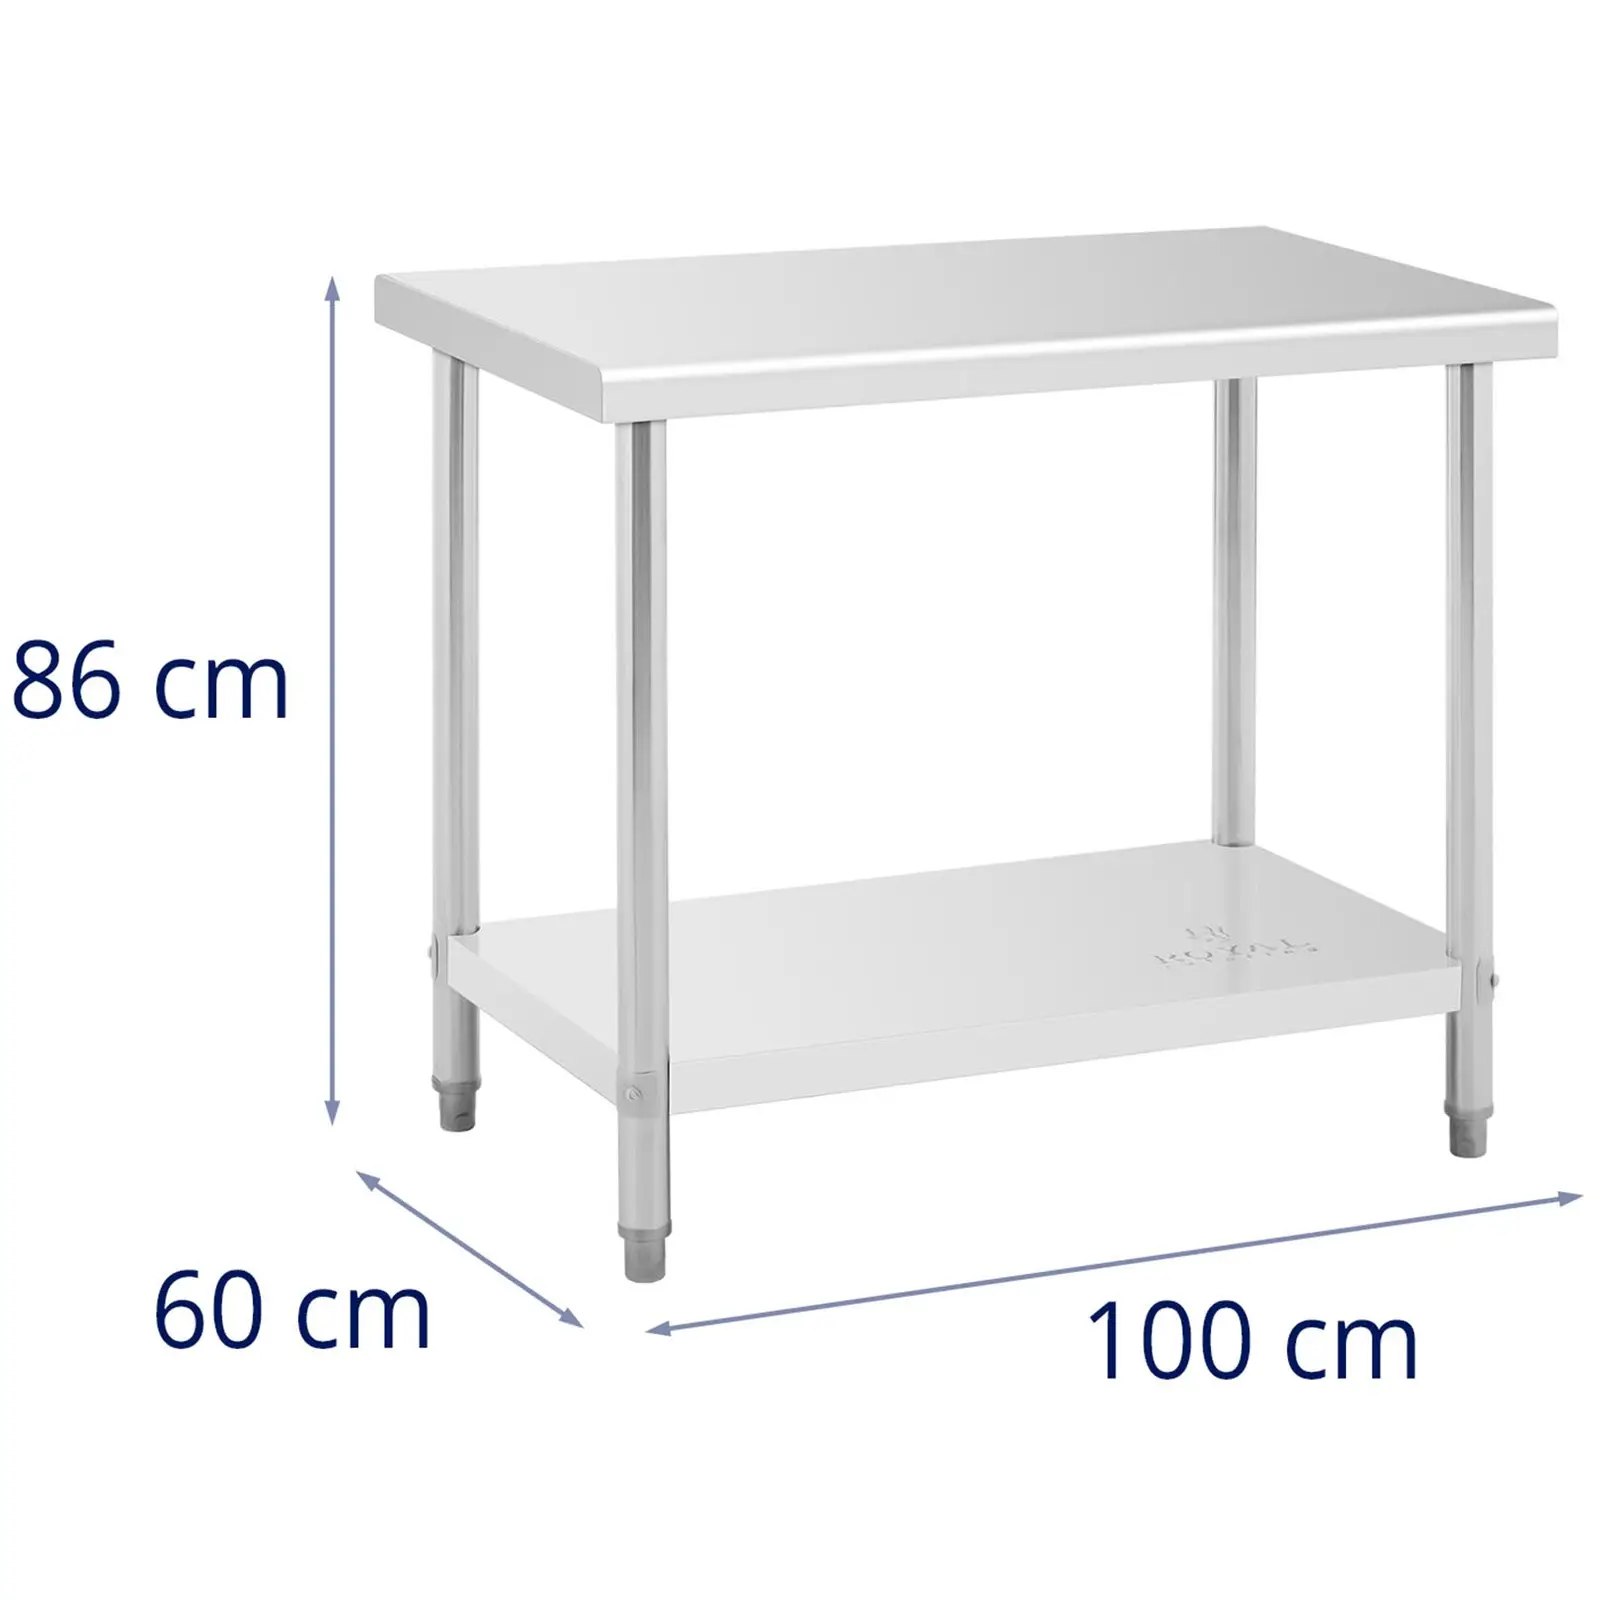 Table de travail inox - 100 x 60 cm - 90 kg